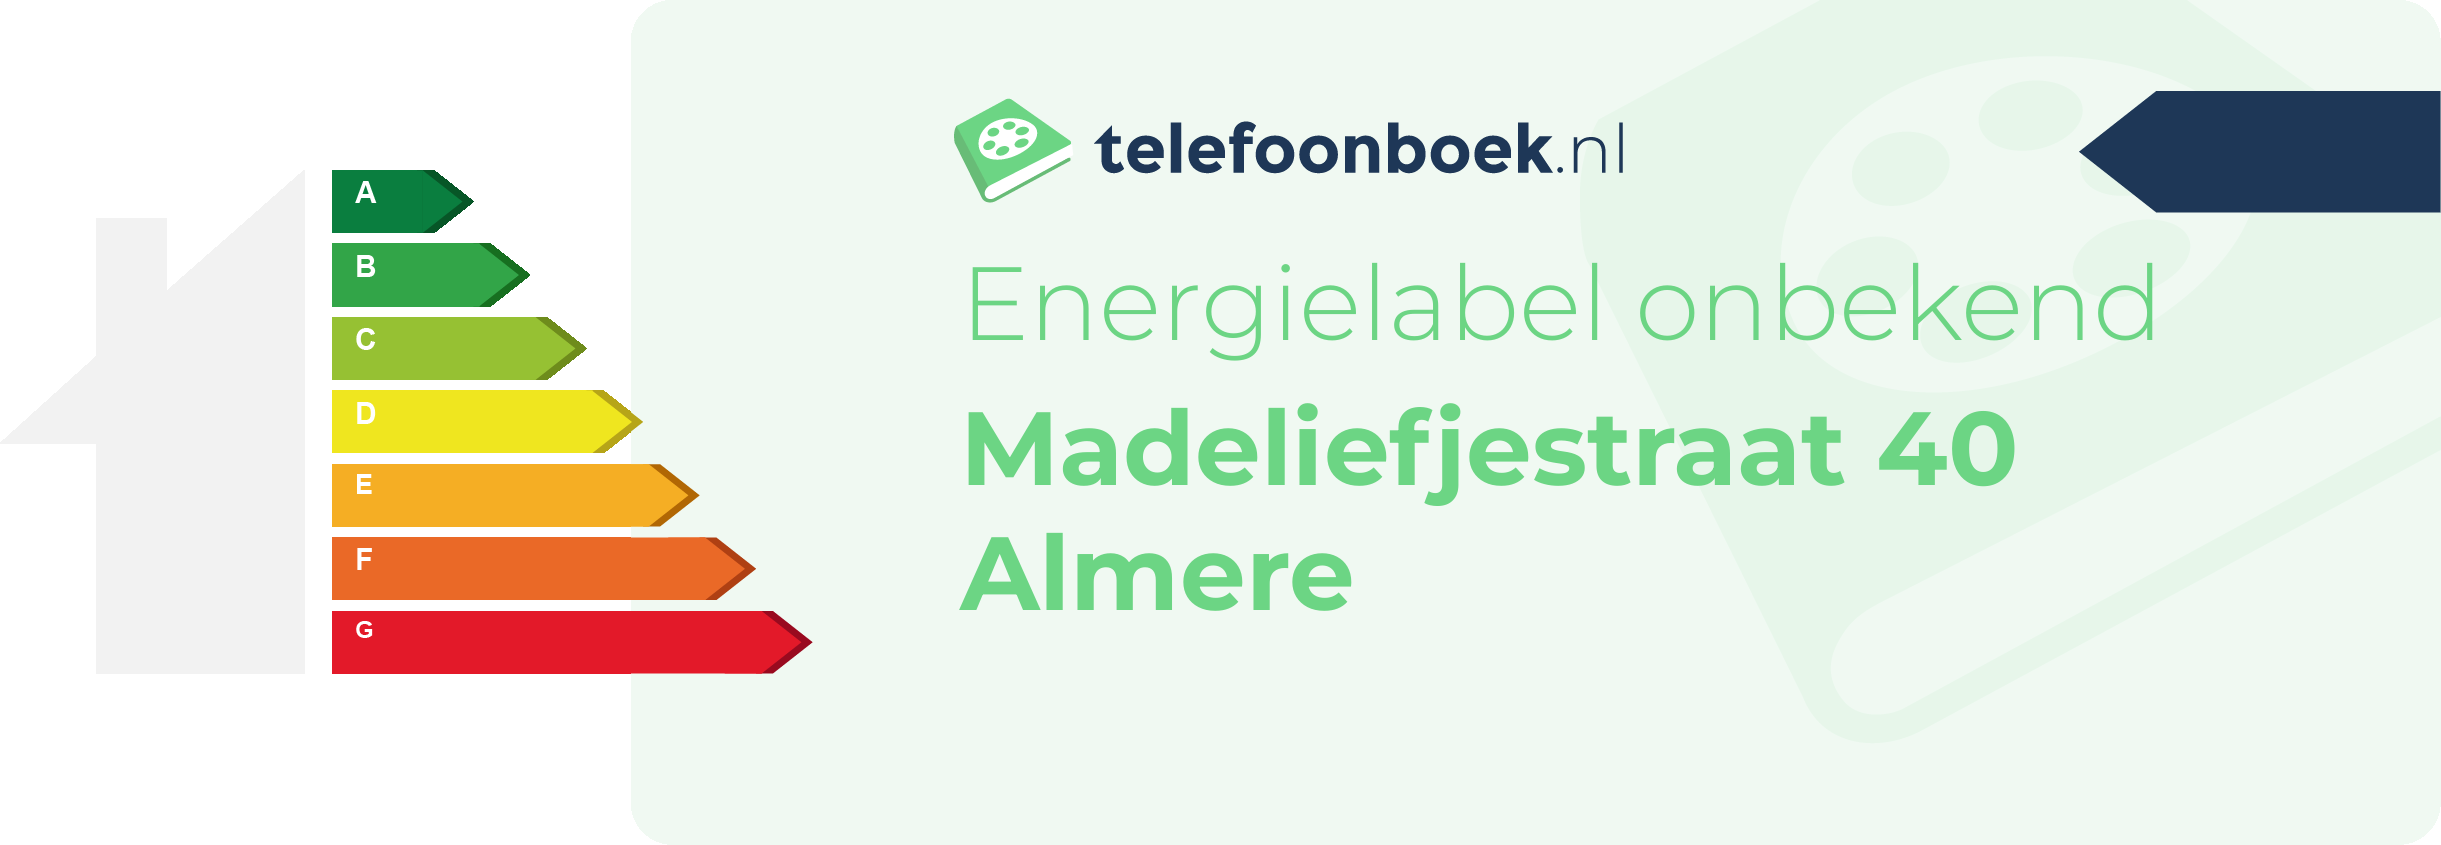 Energielabel Madeliefjestraat 40 Almere